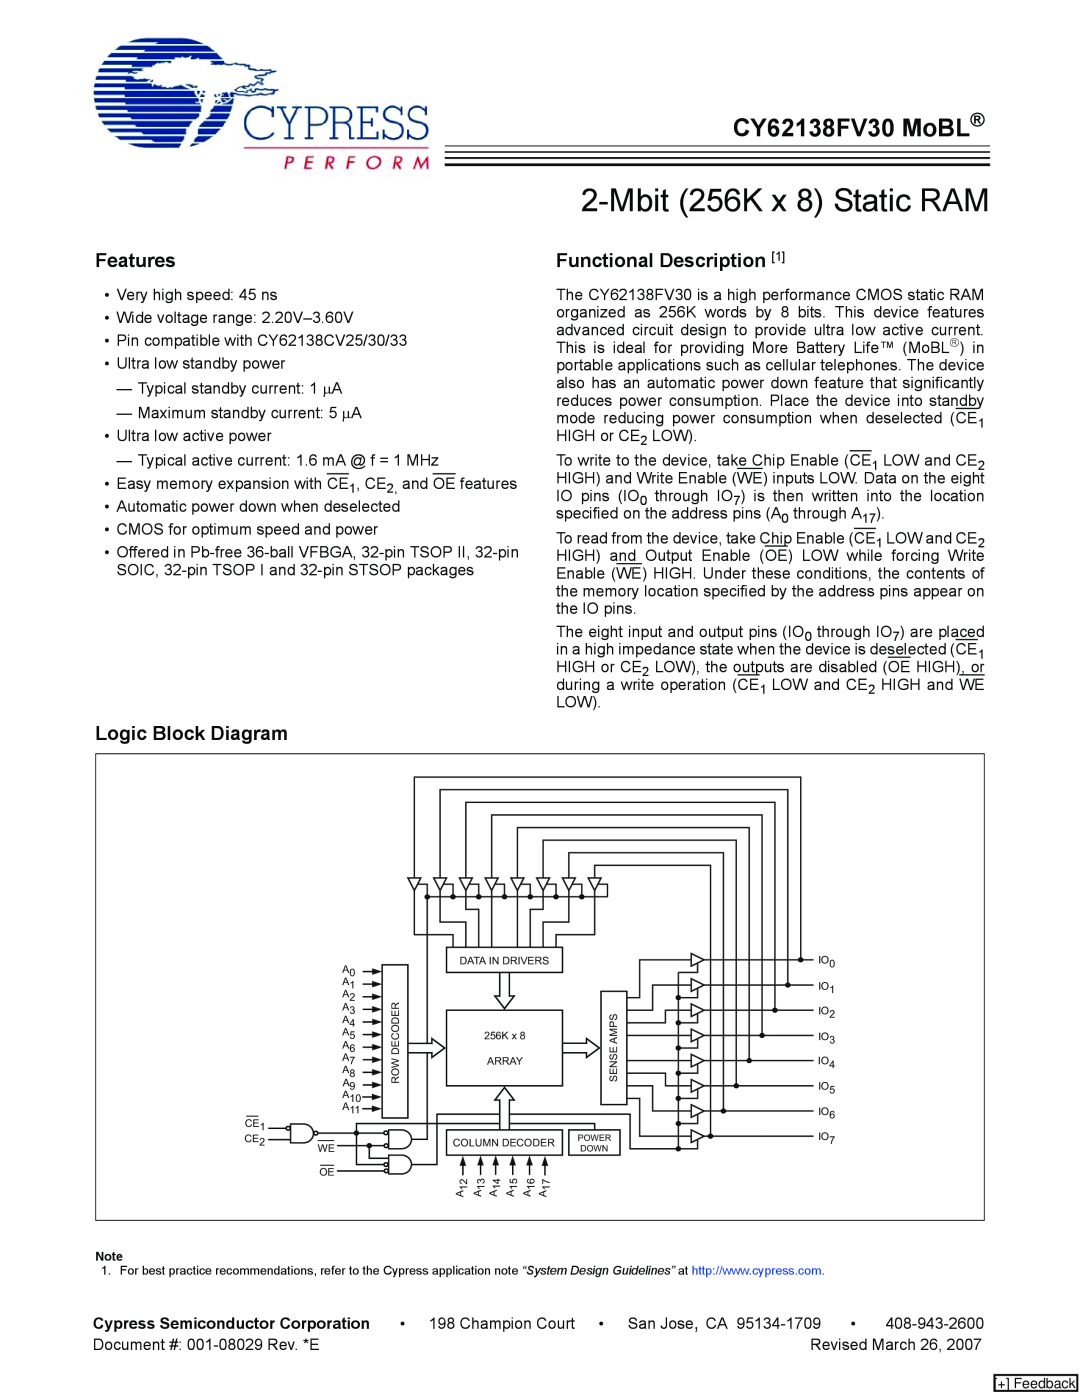 Cypress CY62138CV33, CY62138CV30 manual CY62138FV30 MoBL, Features, Logic Block Diagram, Functional Description 